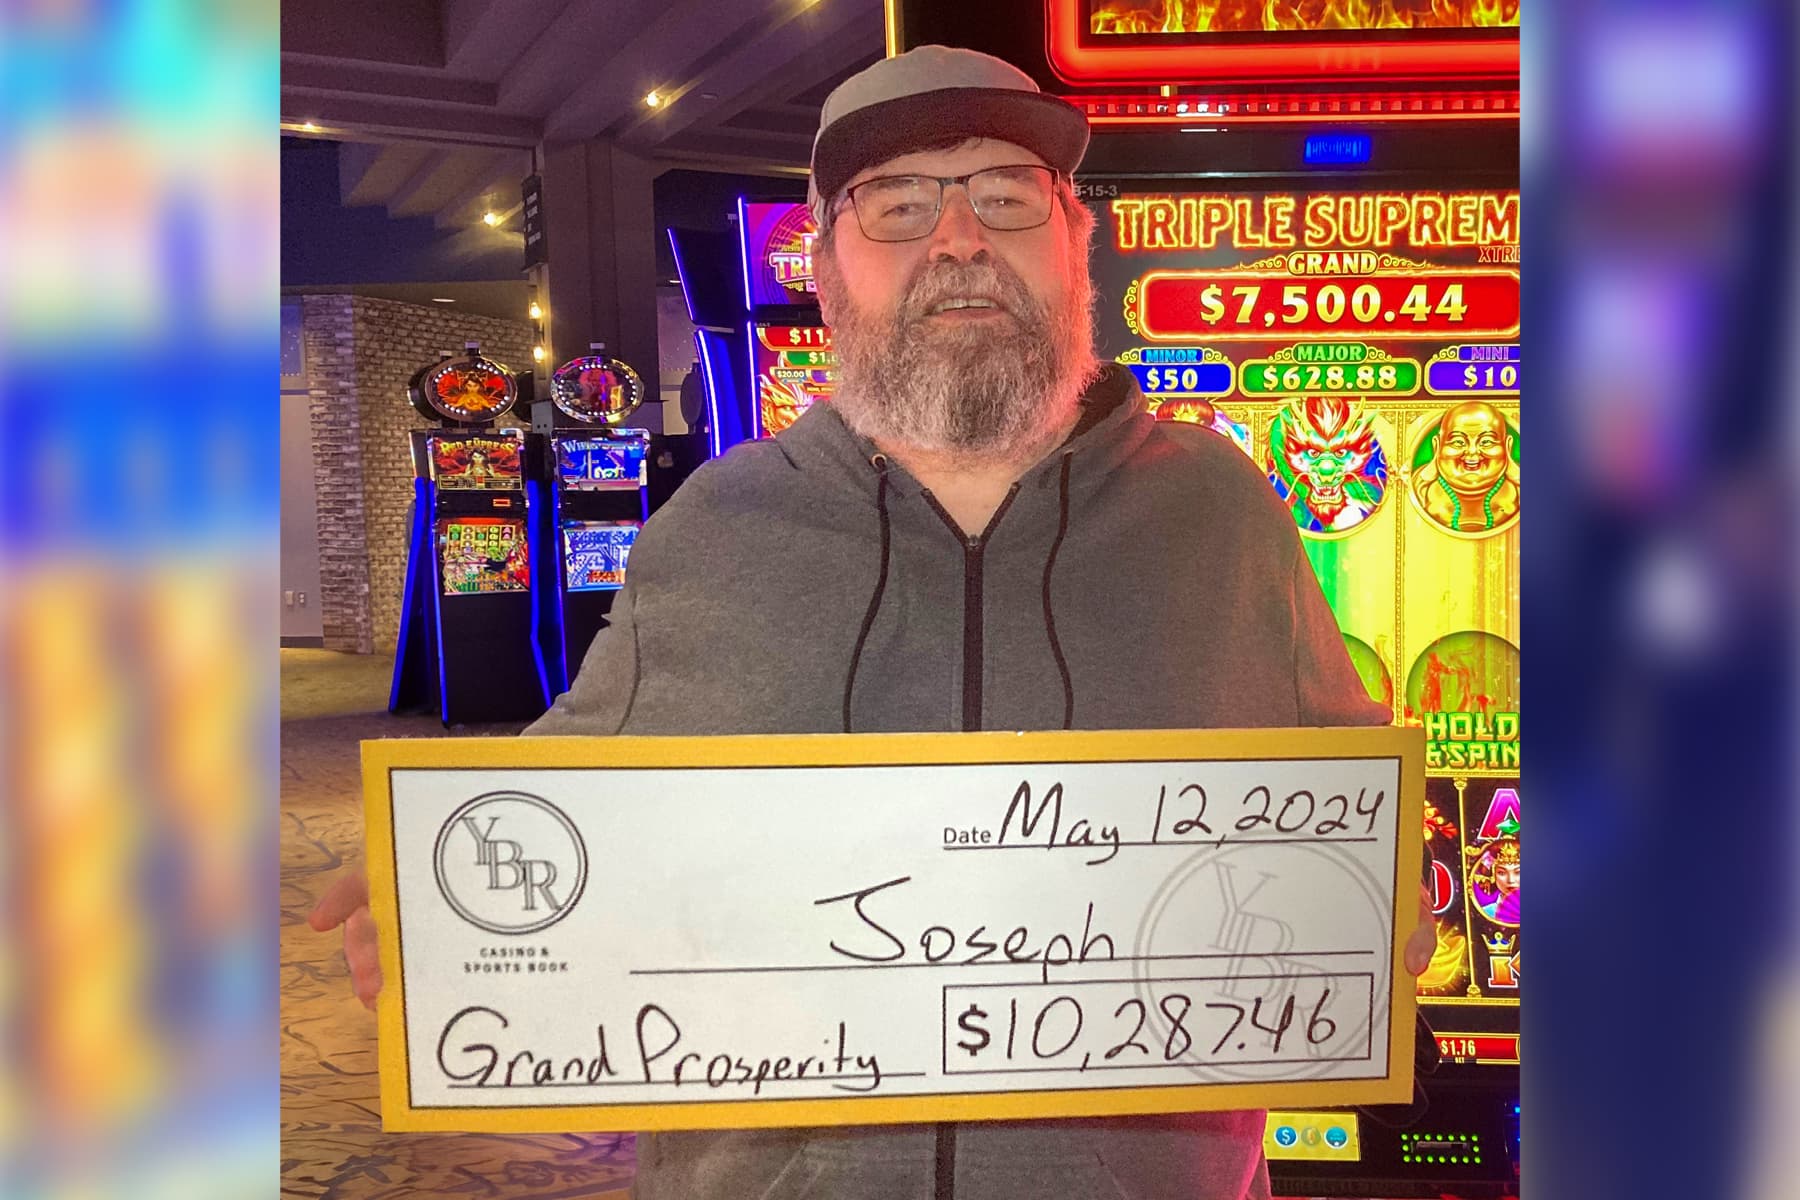 Joseph won $10,287